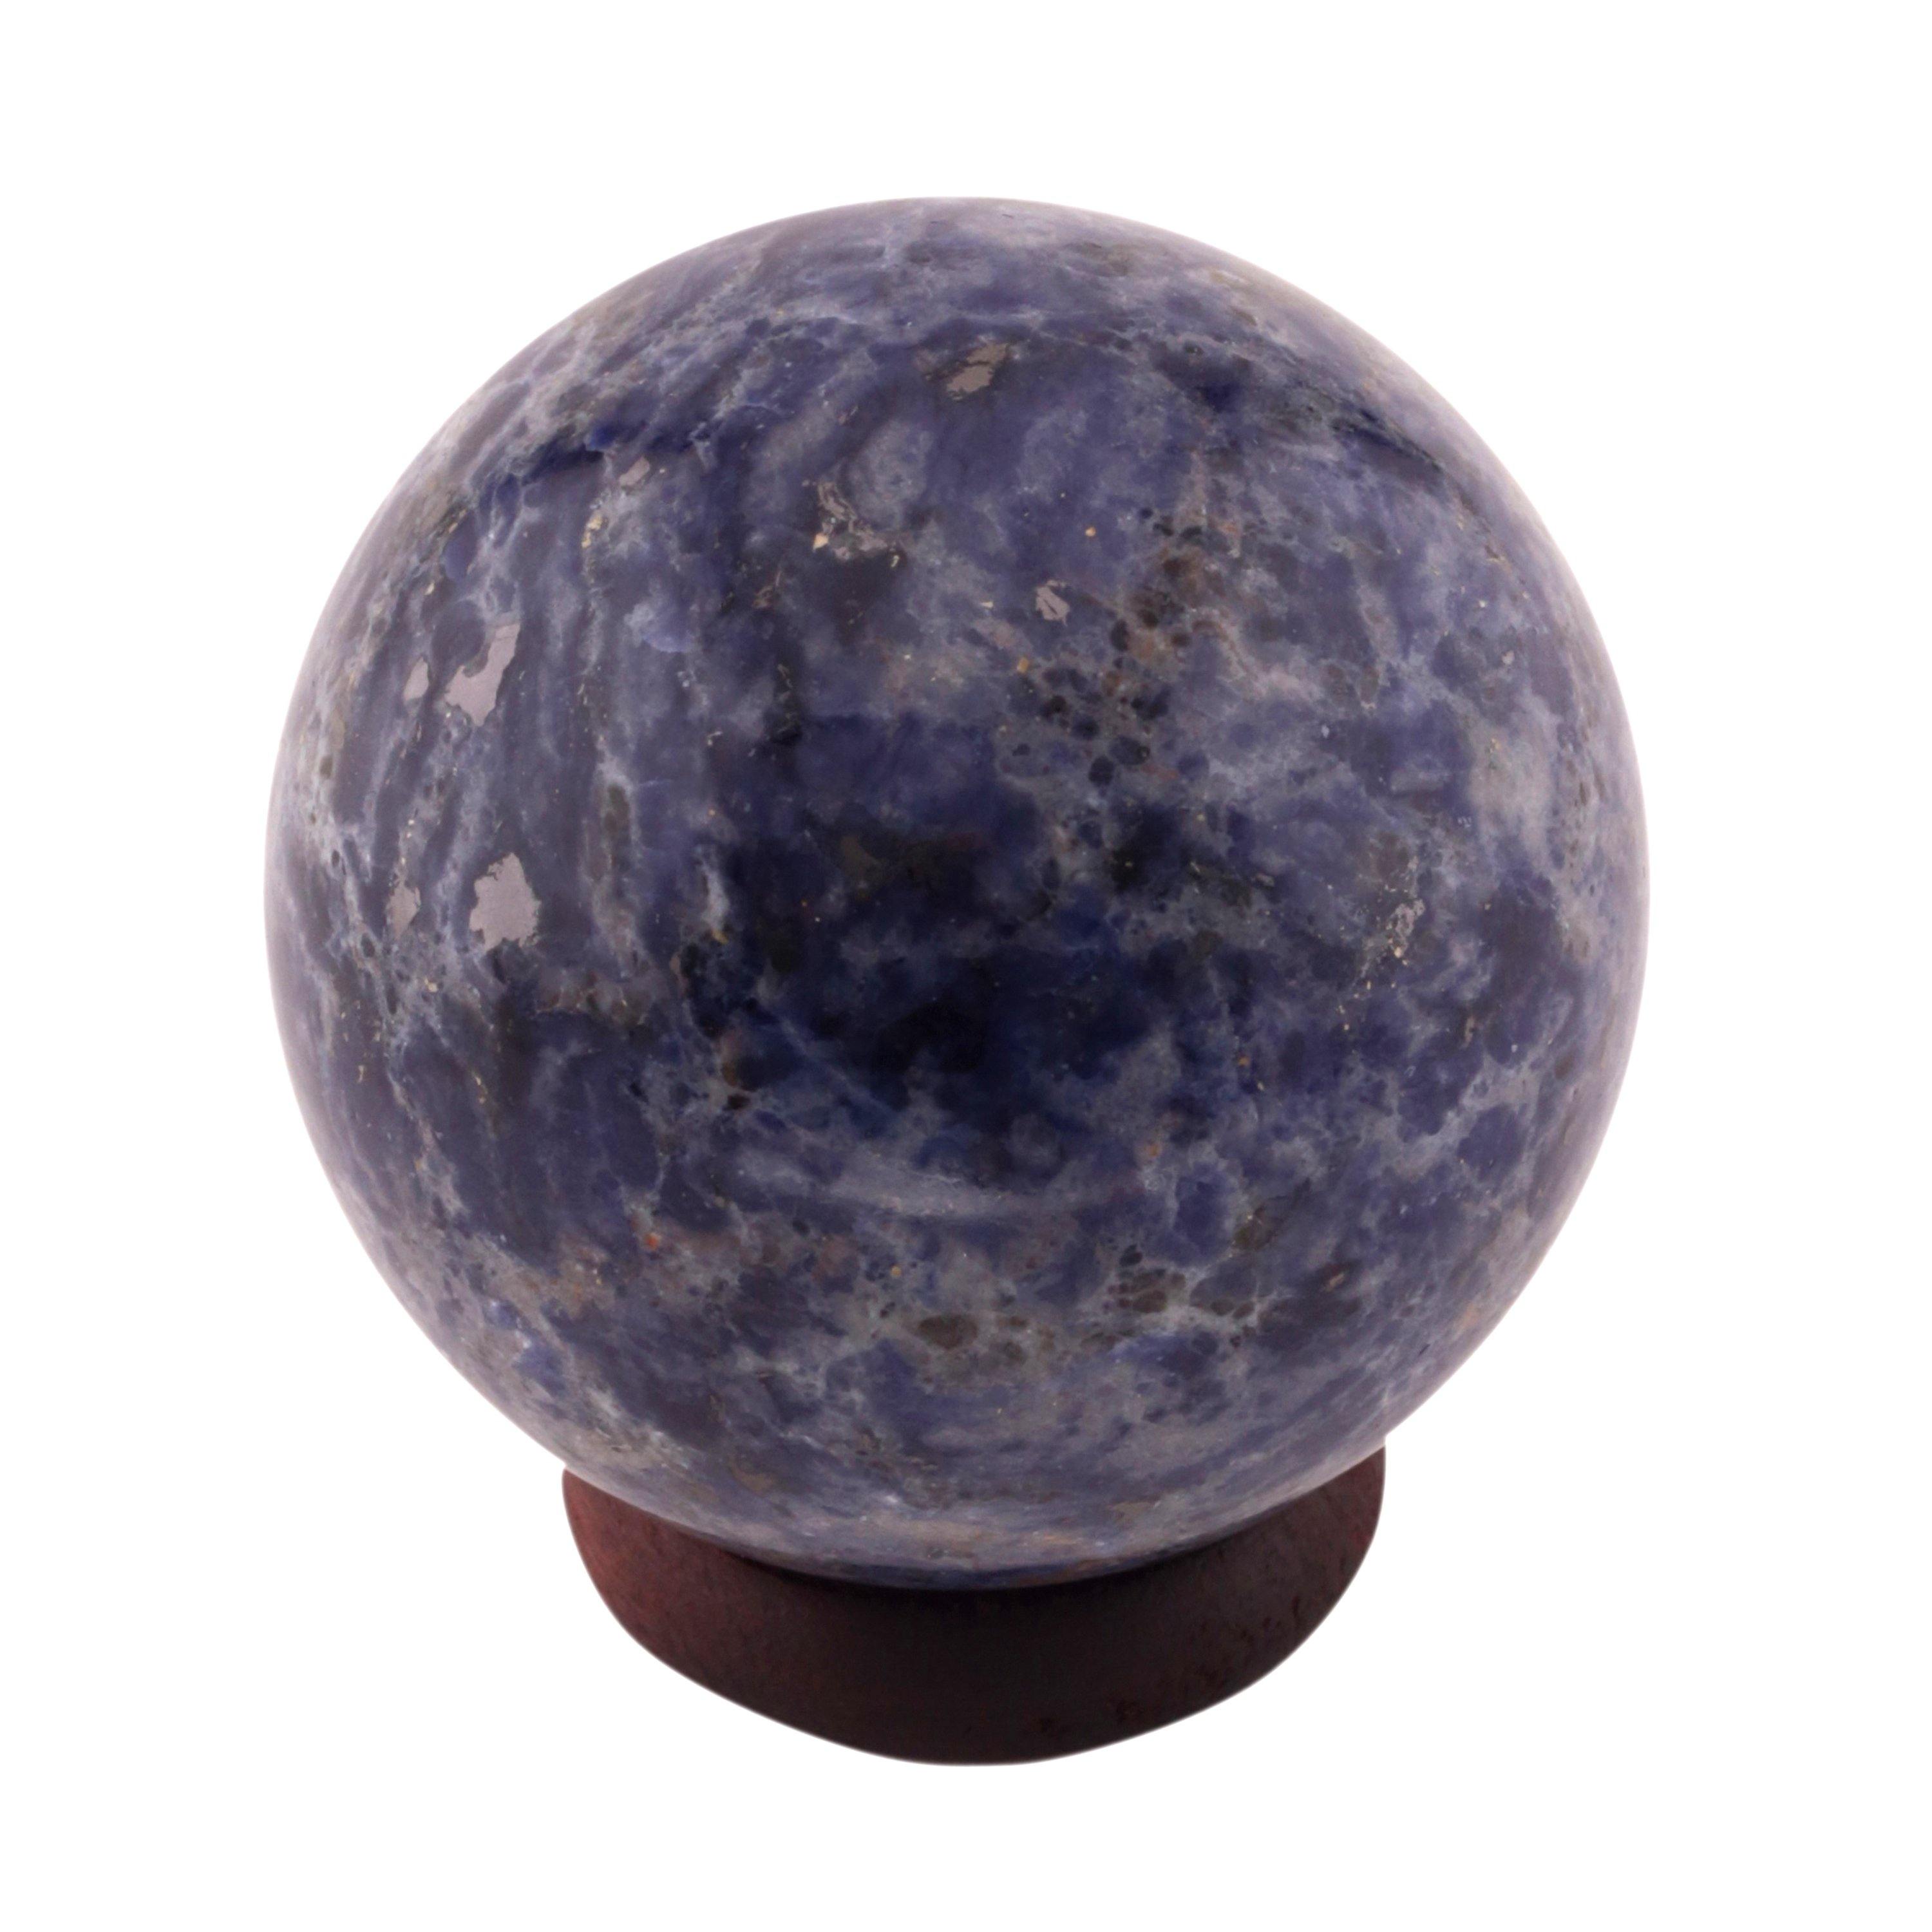 Healing Crystals - Sodalite Sphere 1 Kg Lot